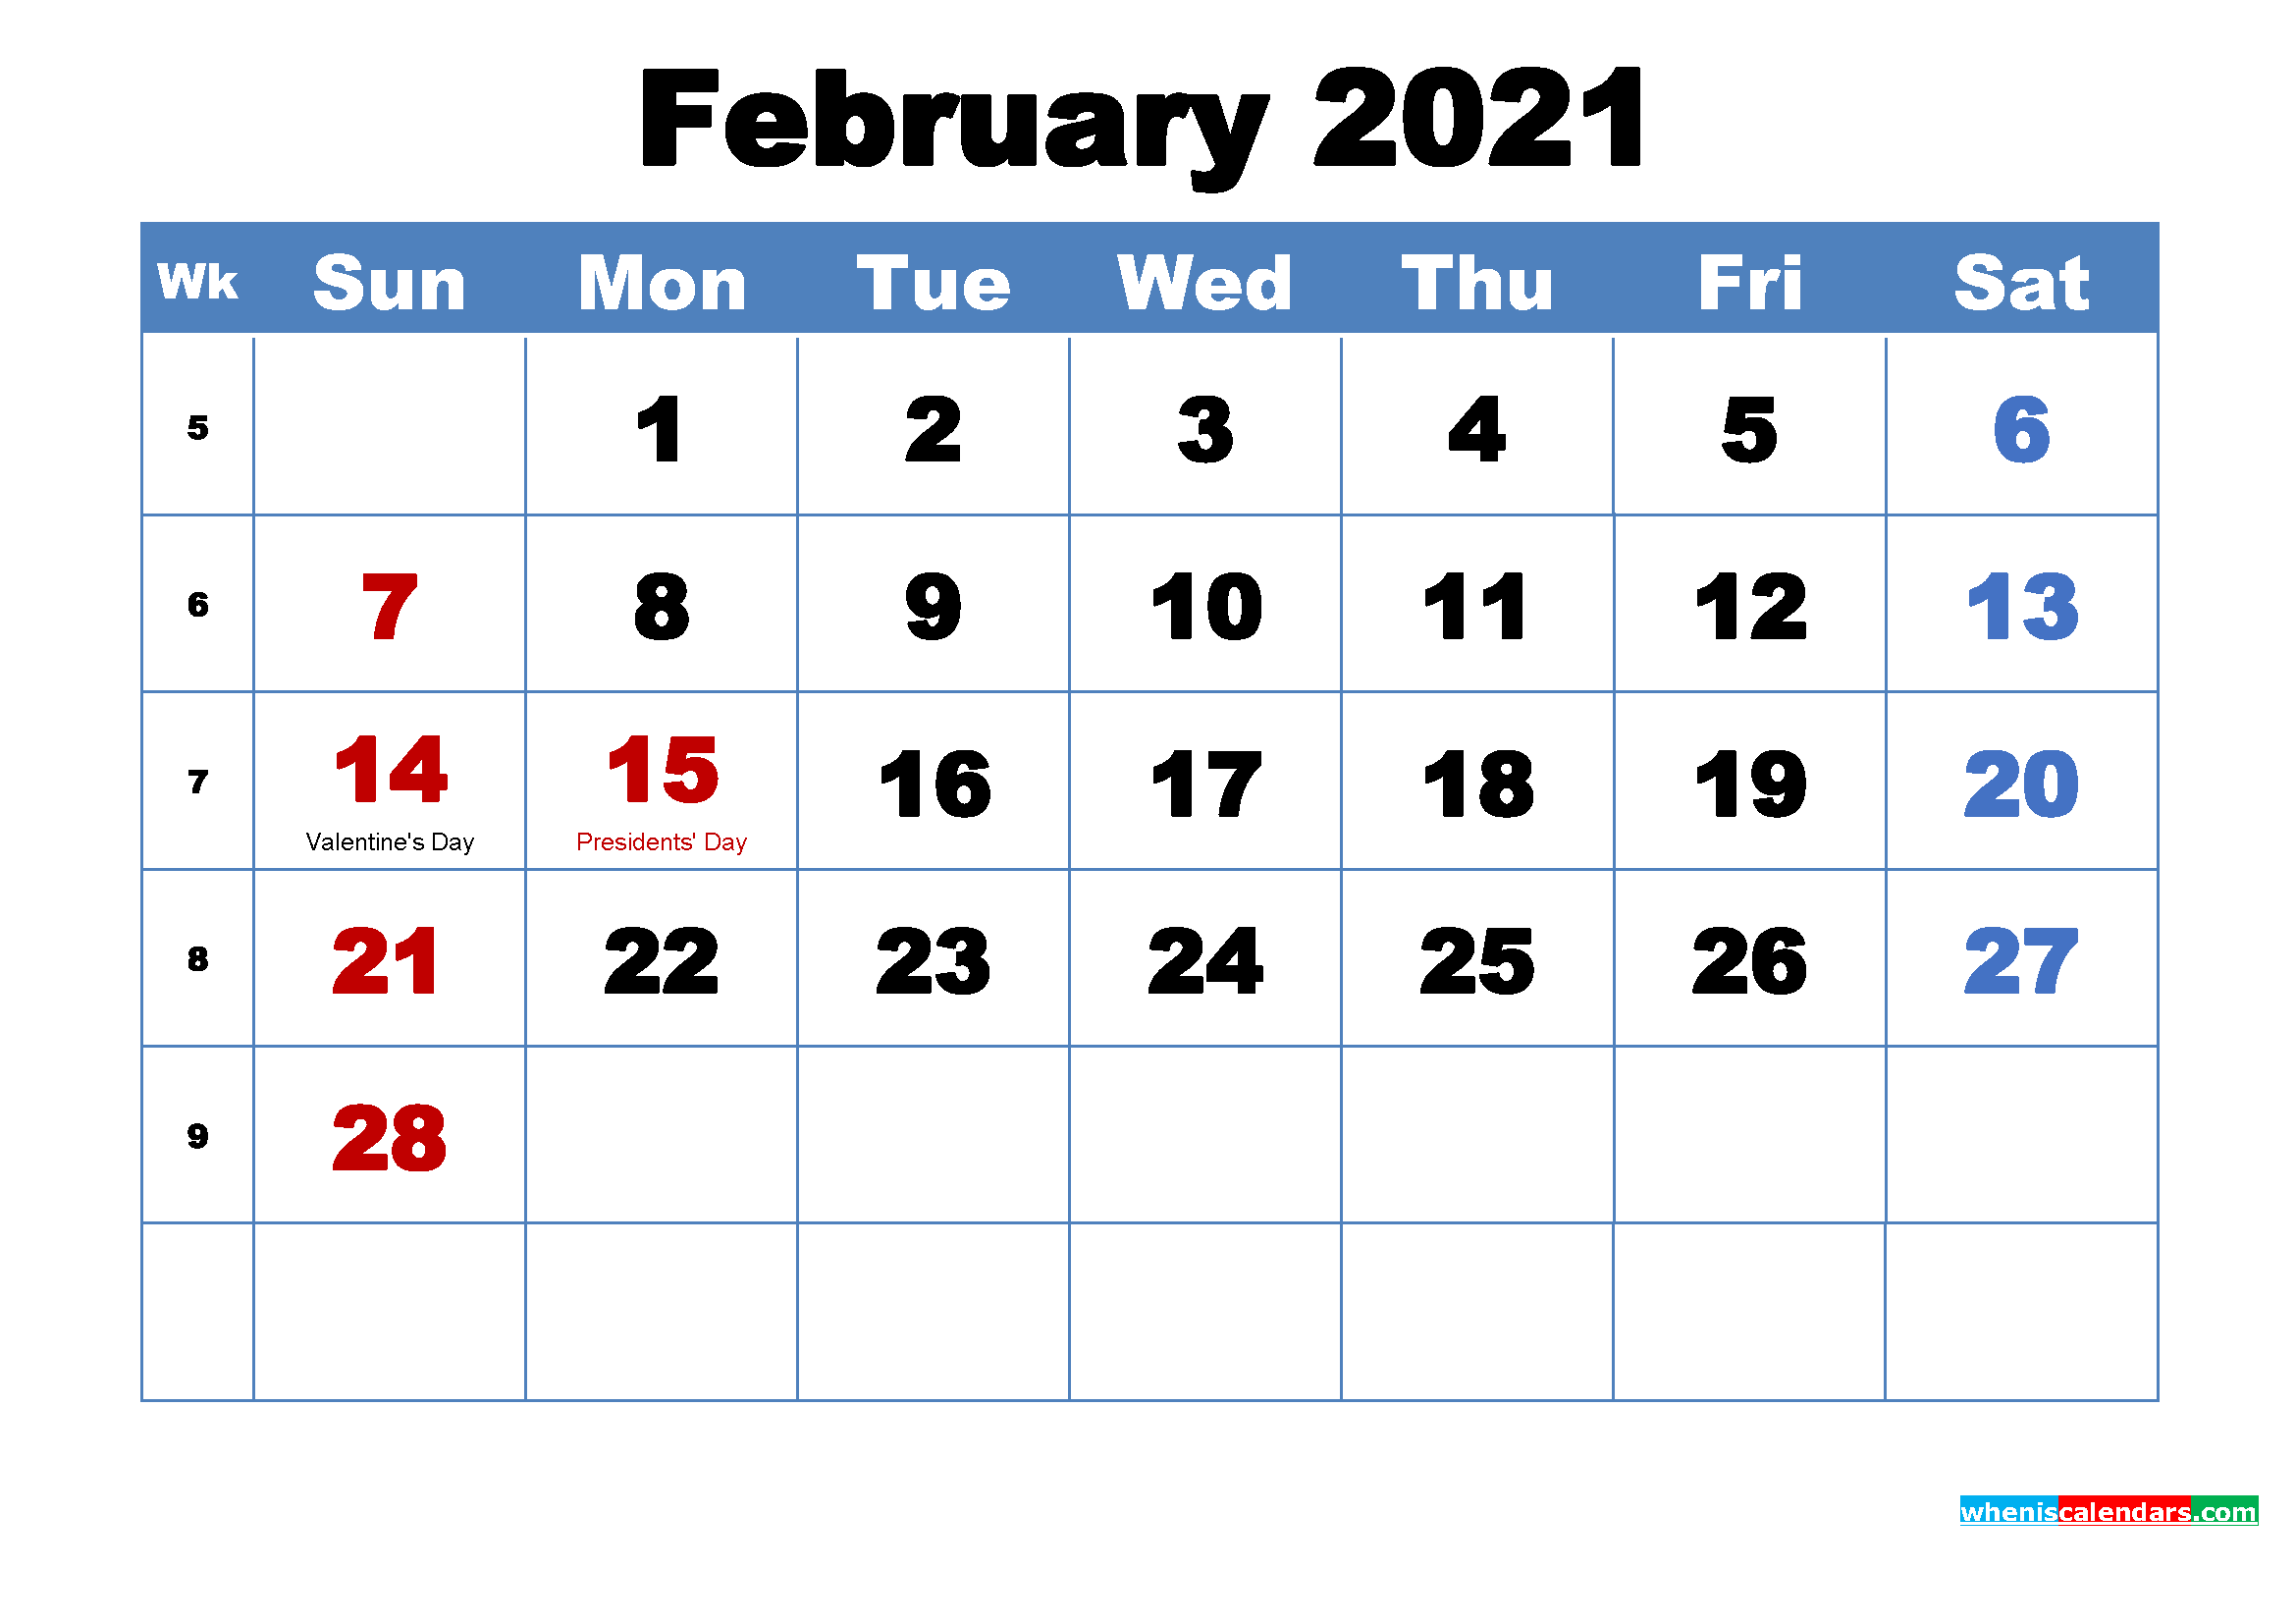 Free Printable February 2021 Calendar With Holidays Free Printable